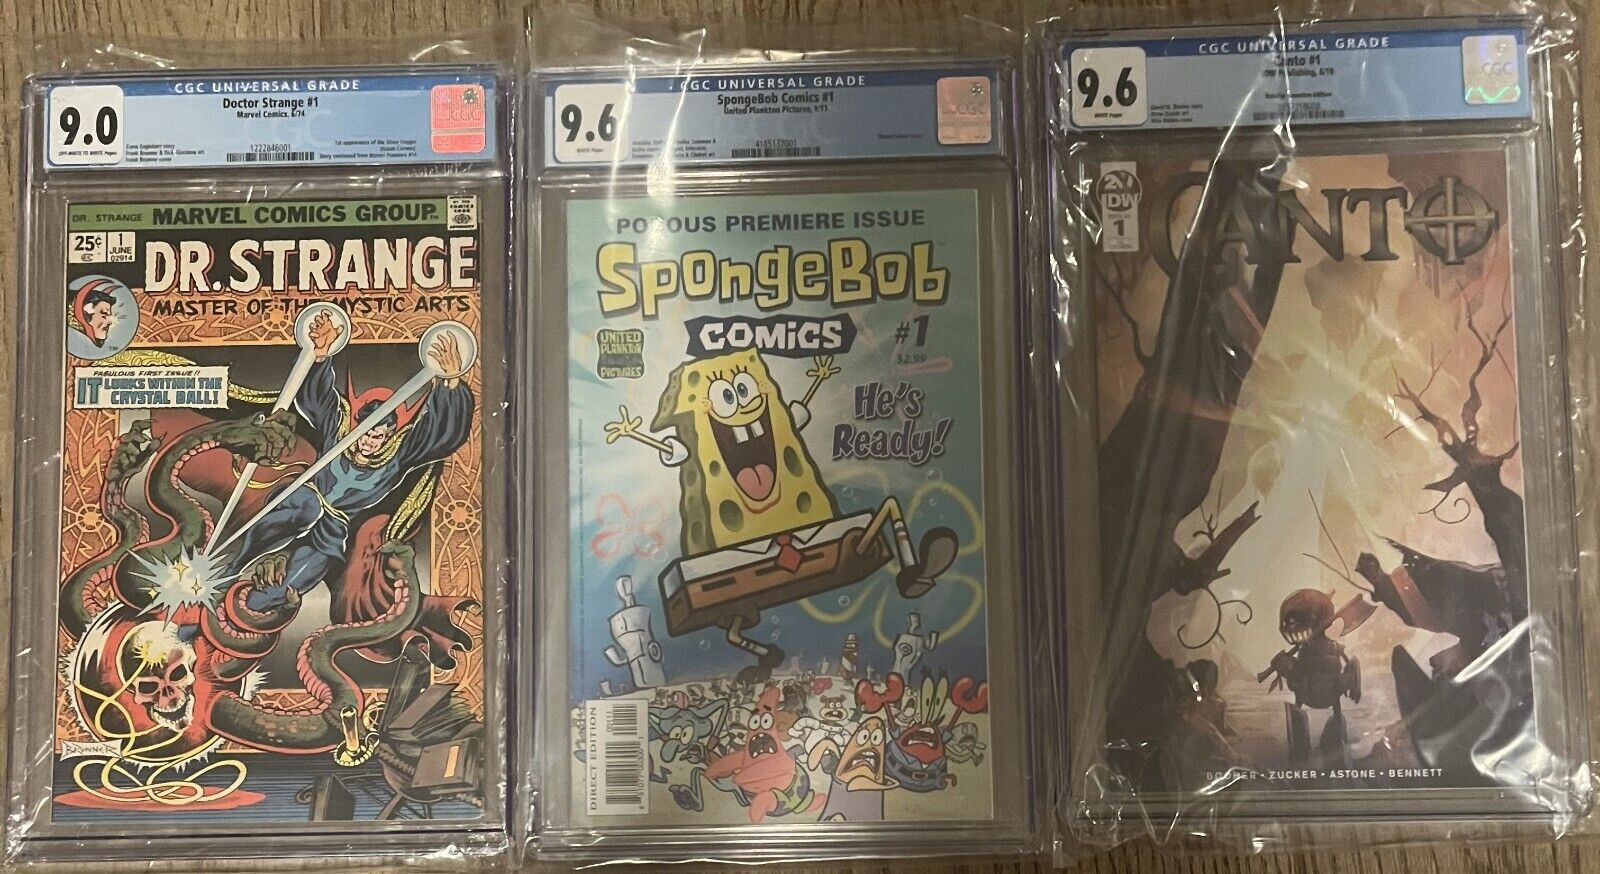 Various CGC graded comics - incl. Doctor Strange 1, Canto 1, SpongeBob 1 & more